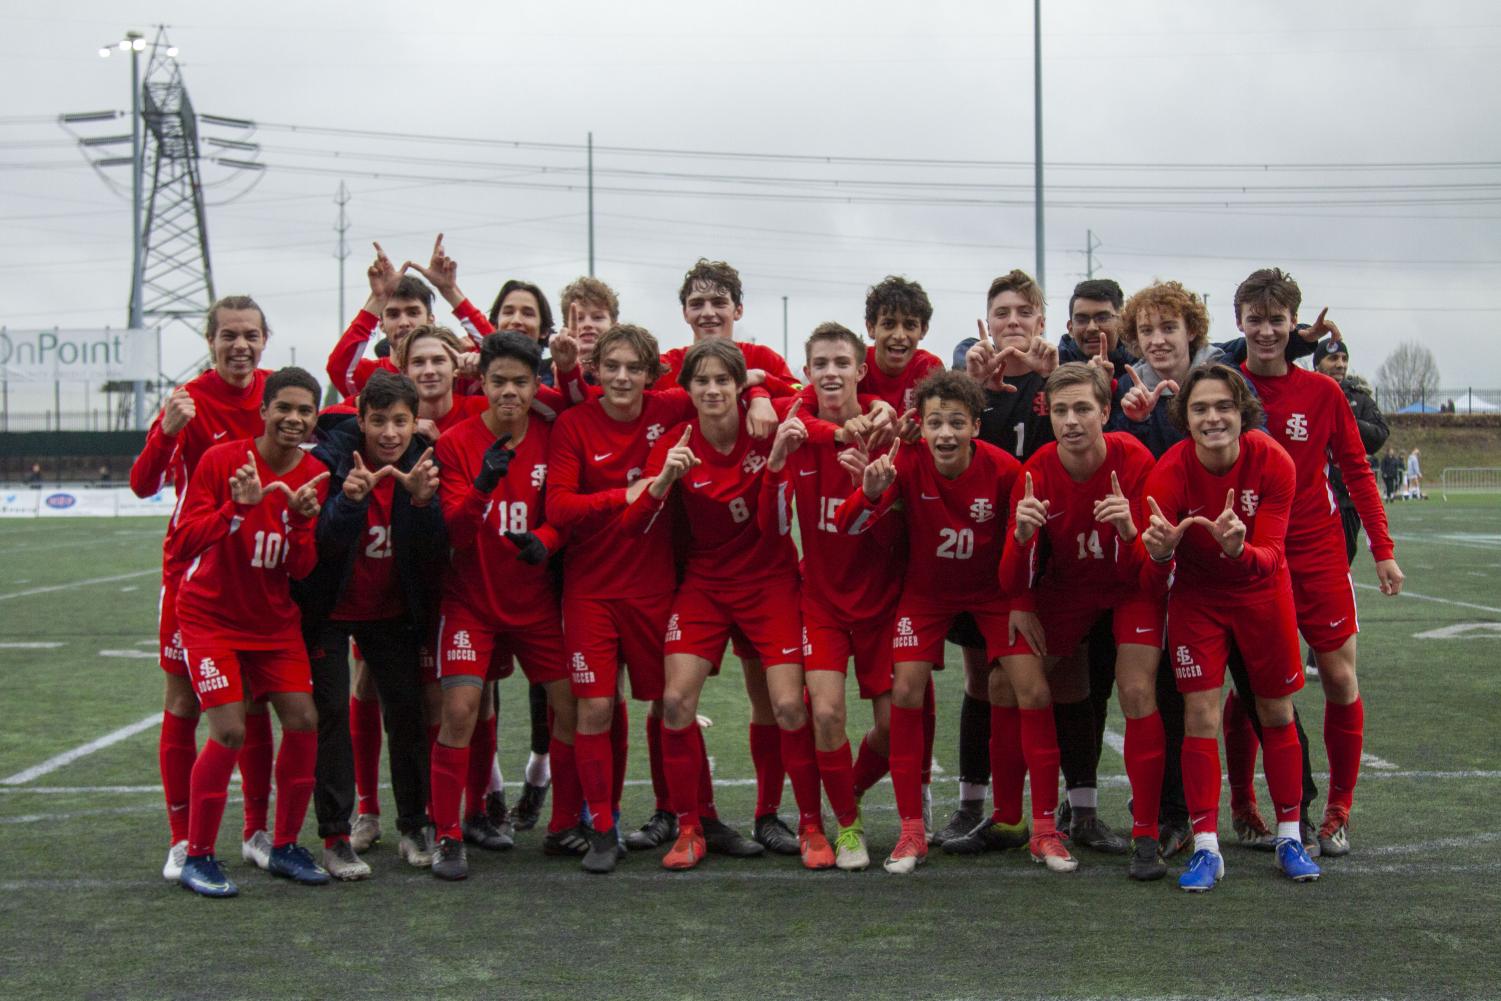 La+Salle+Wins+5A+Boys+Soccer+Championship